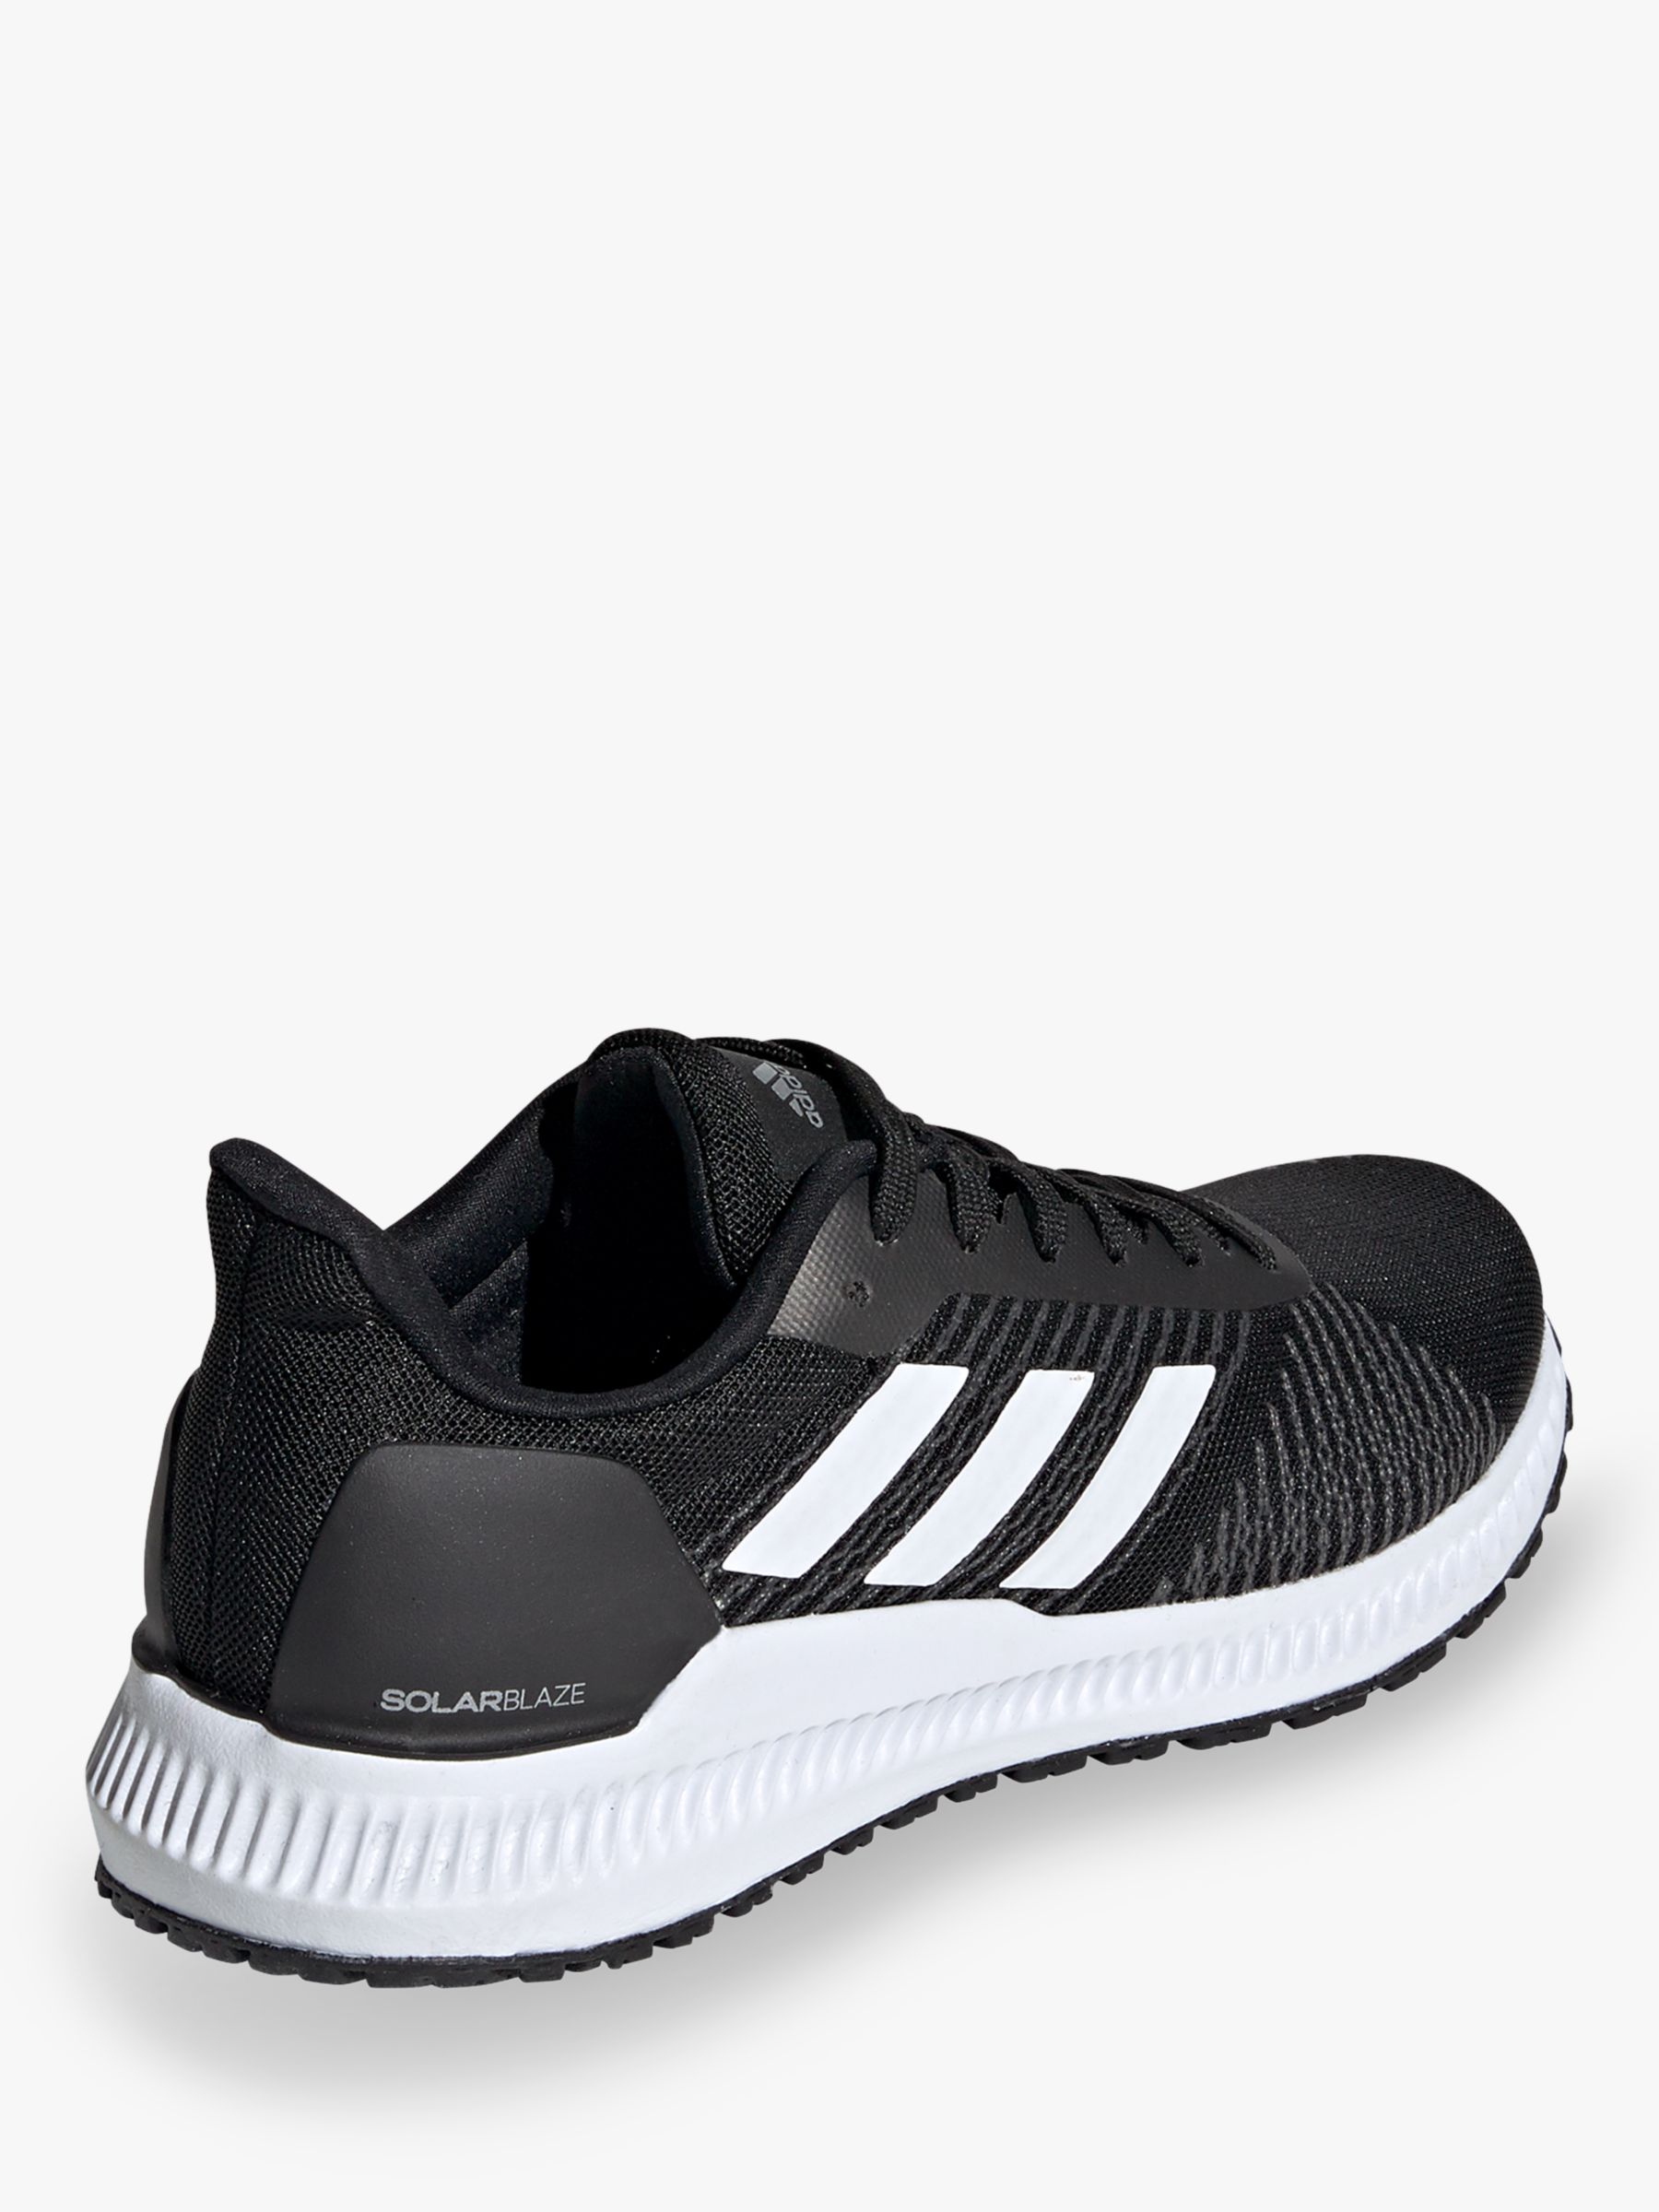 adidas solar blaze ladies running shoes